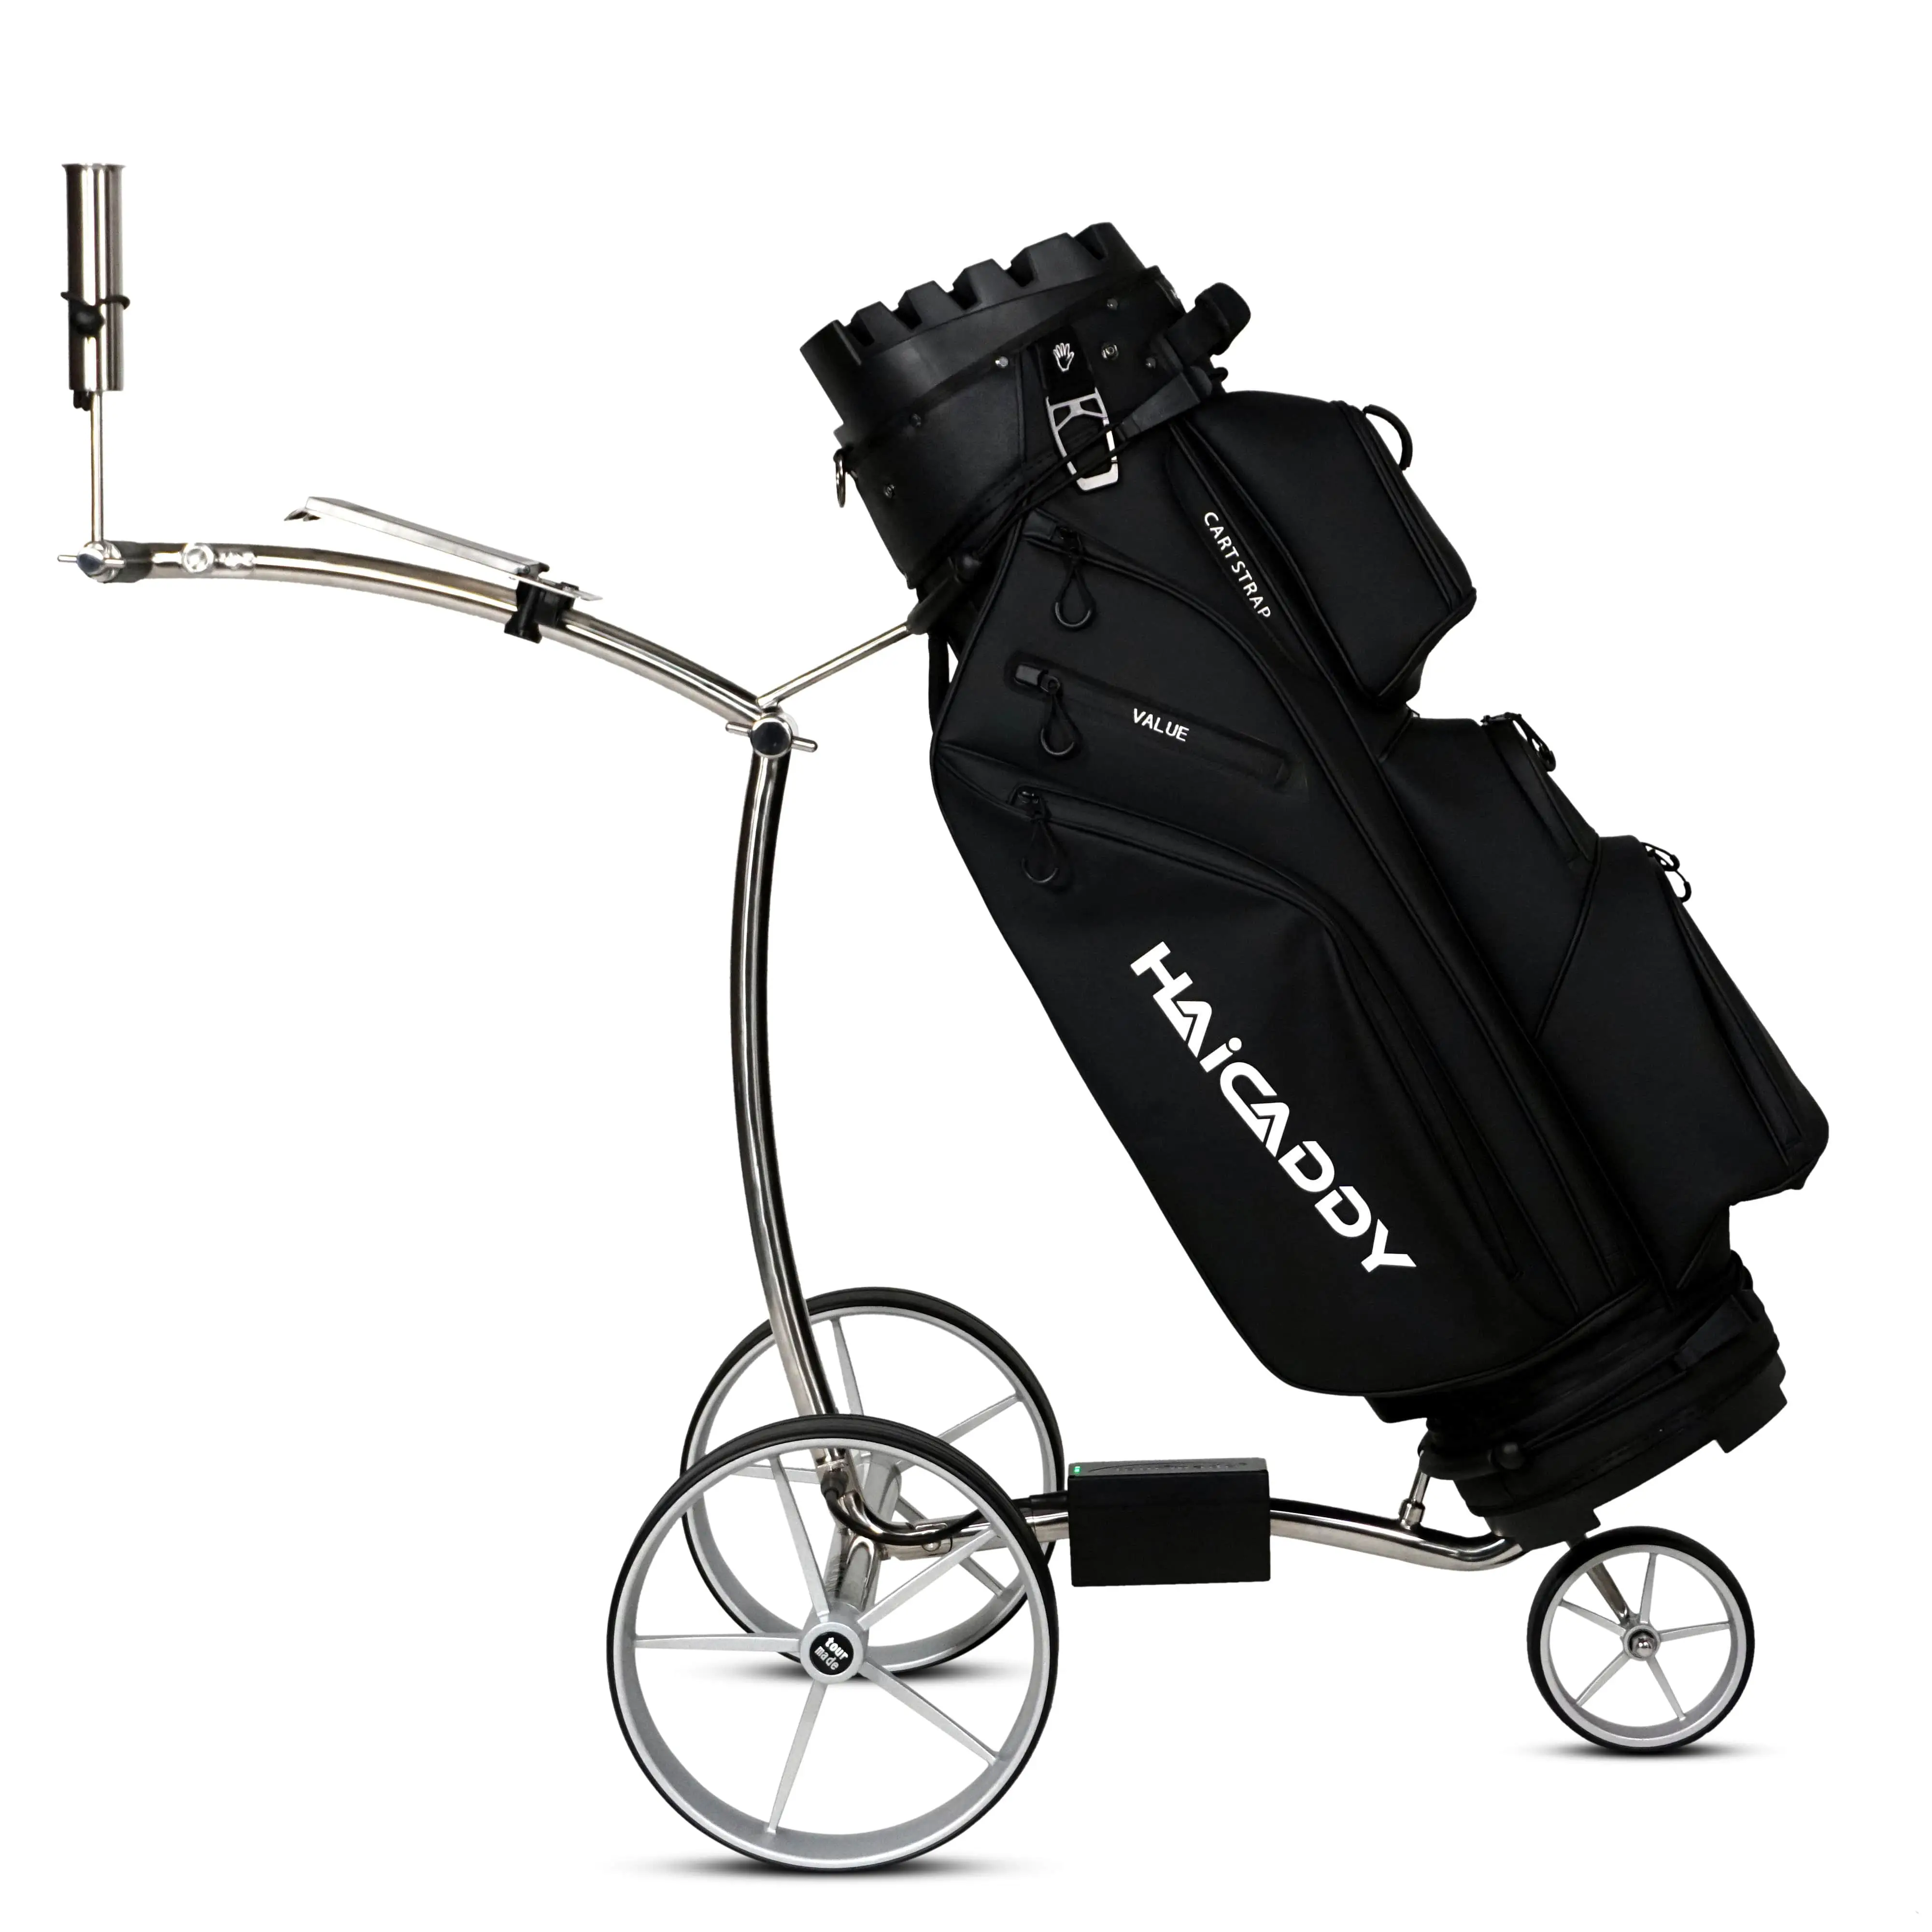 Tour Made Haicaddy® HC7S electric golf trolley